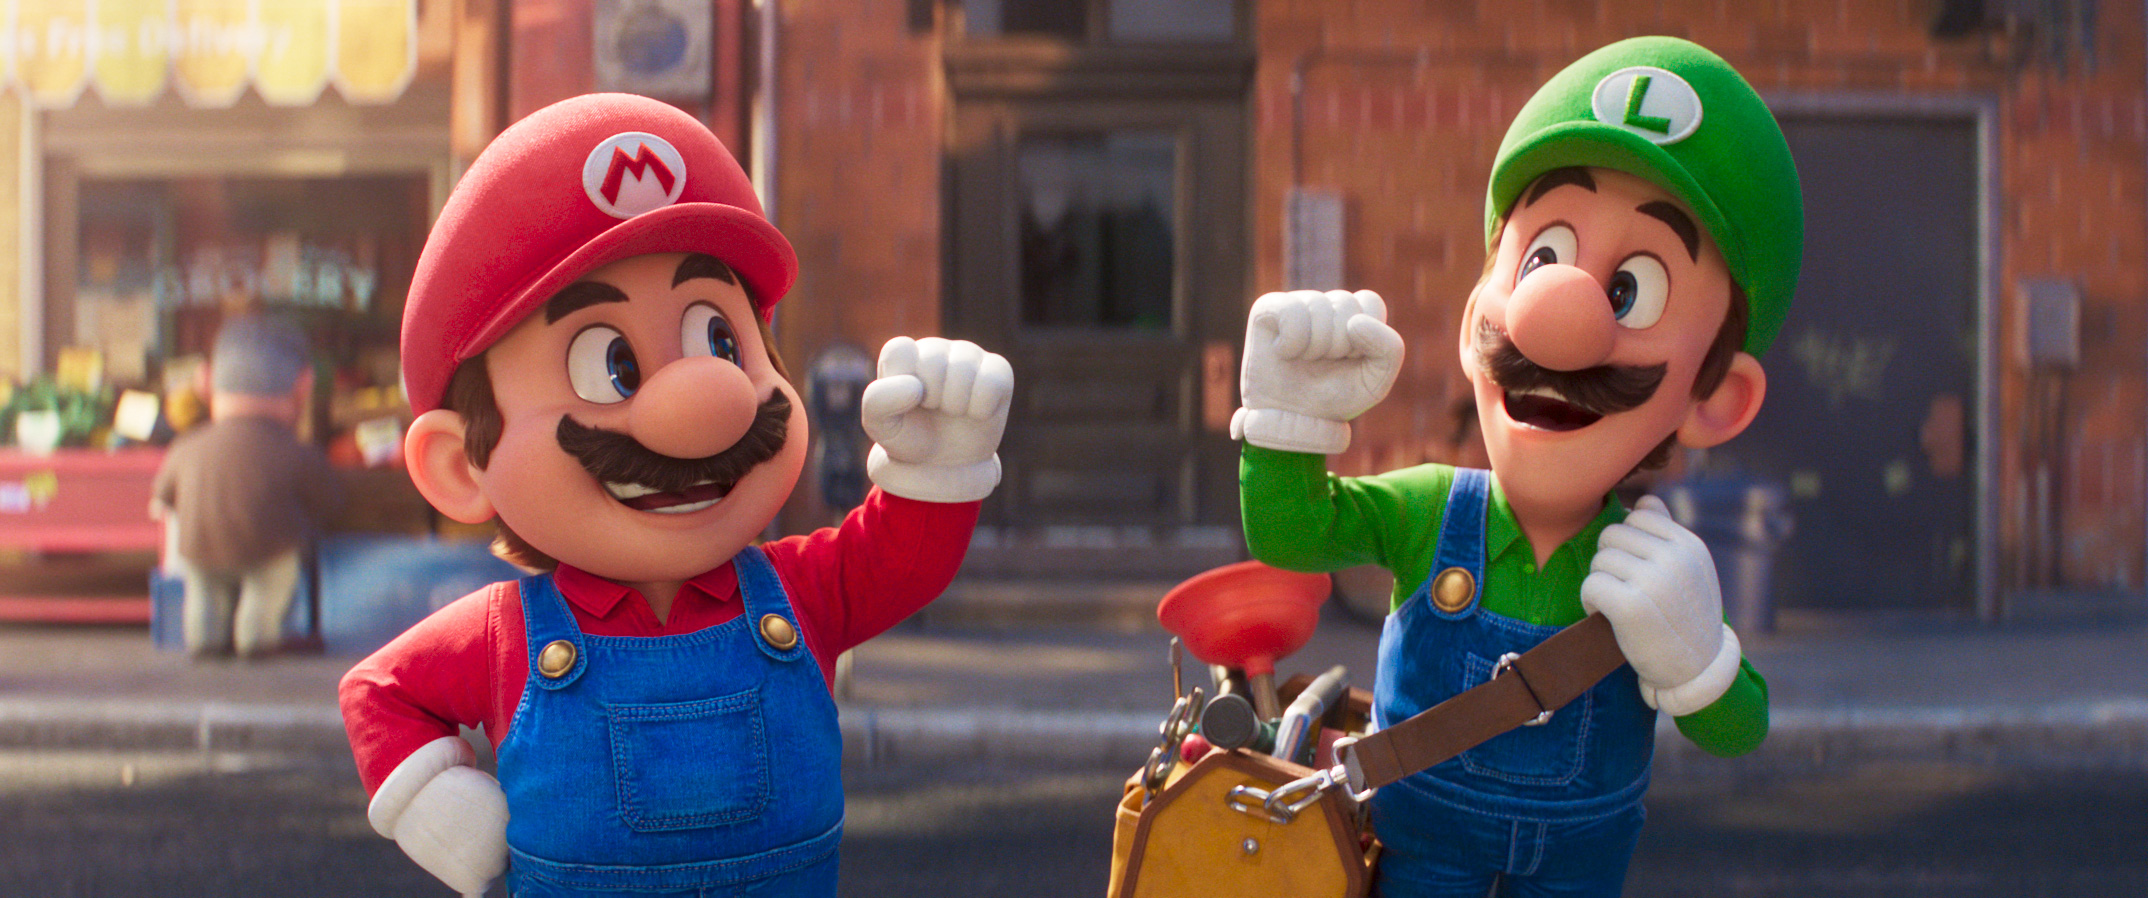 Super Mario Bros. Movie Viewed by 168 Million People Worldwide